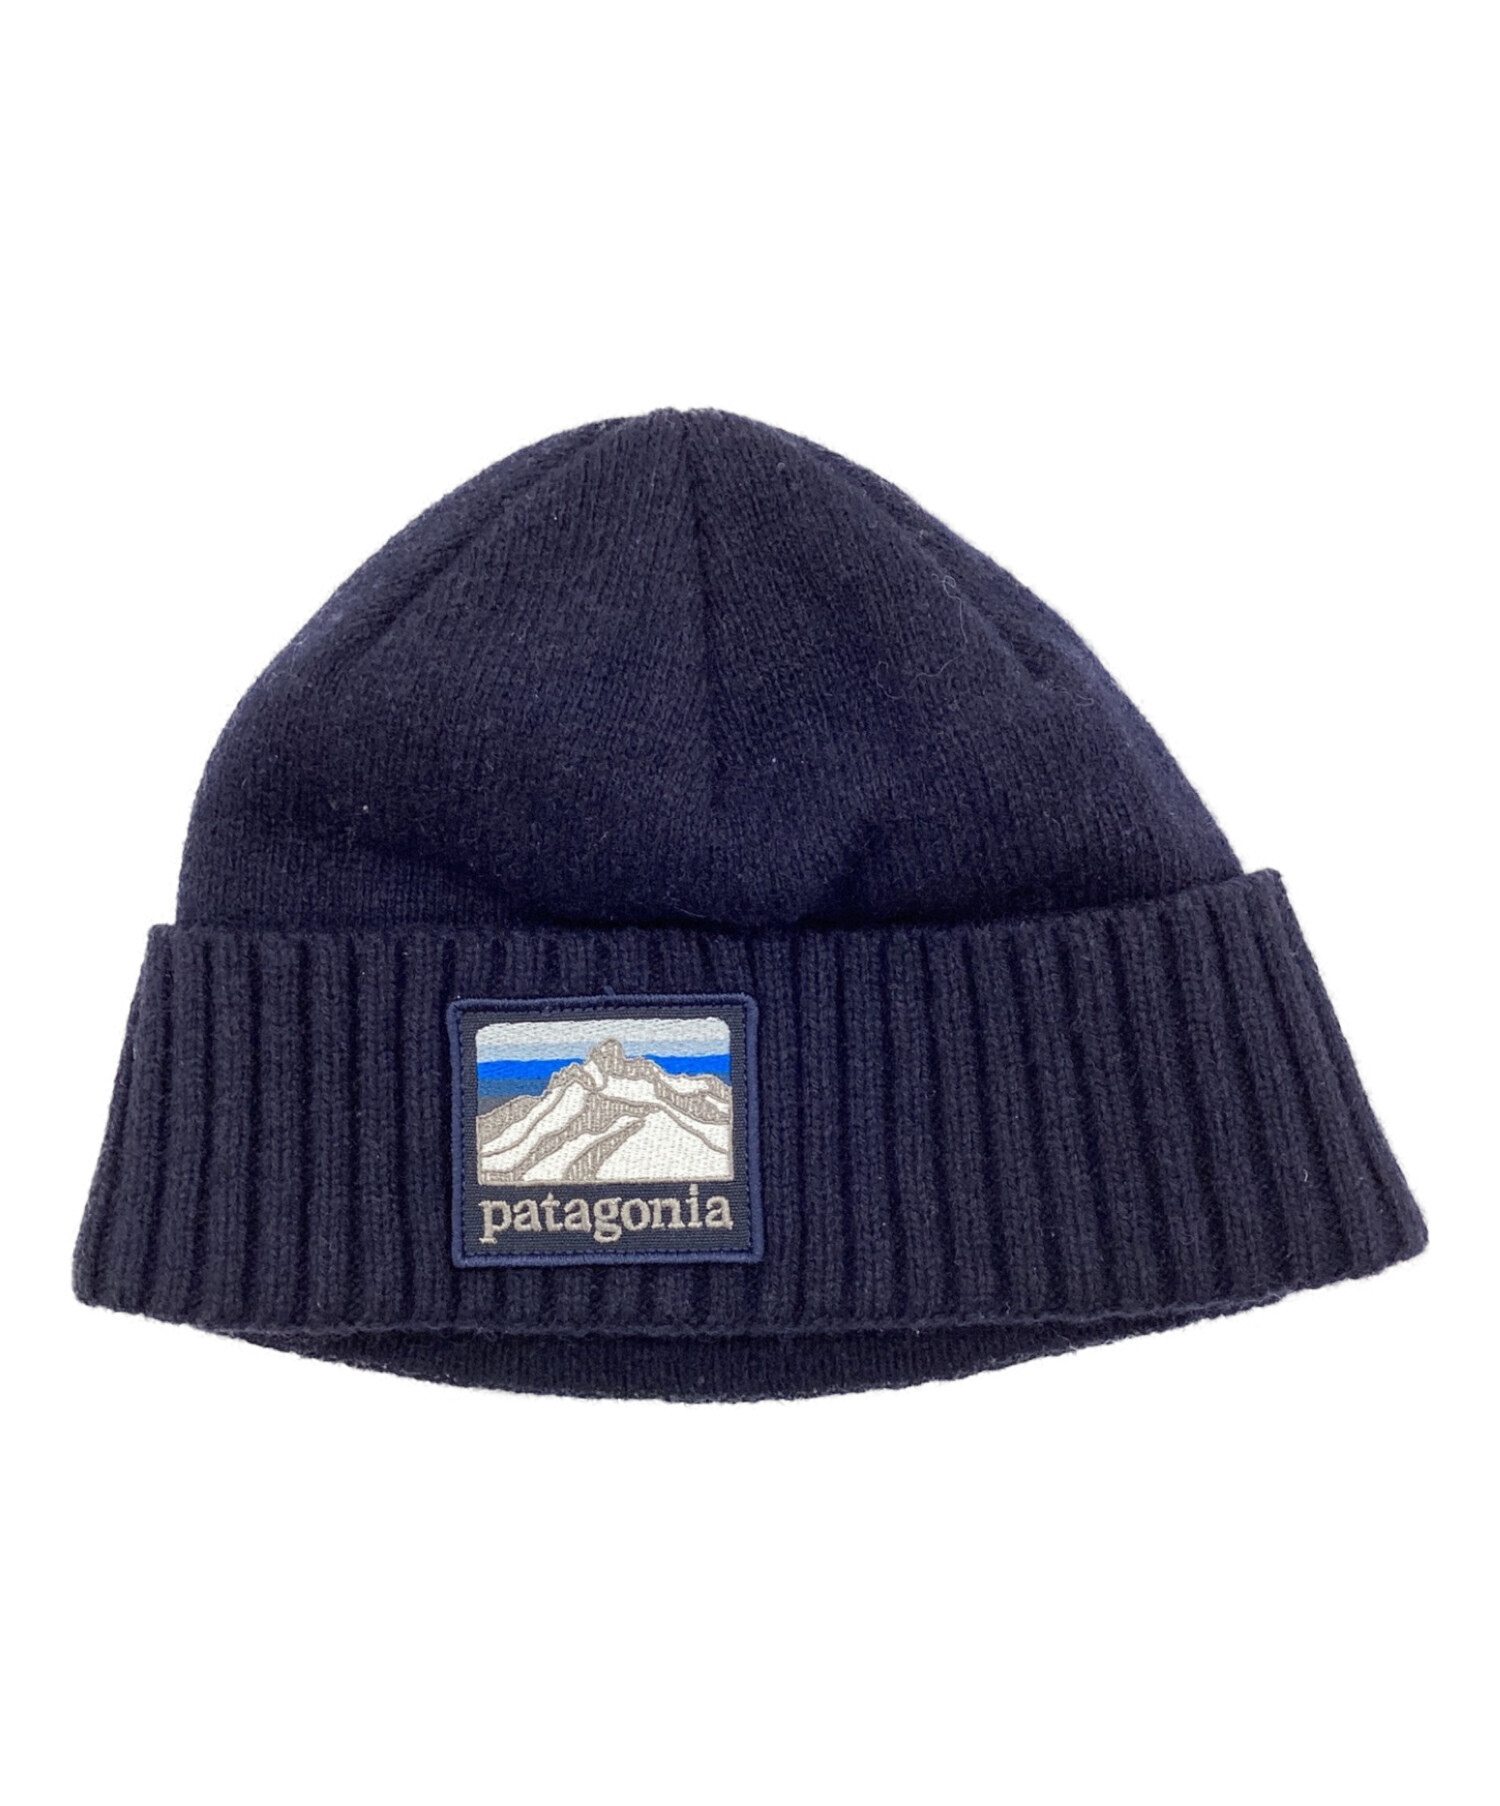 patagonia パタゴニア ニットキャップ ニット帽 ネイビー - 帽子